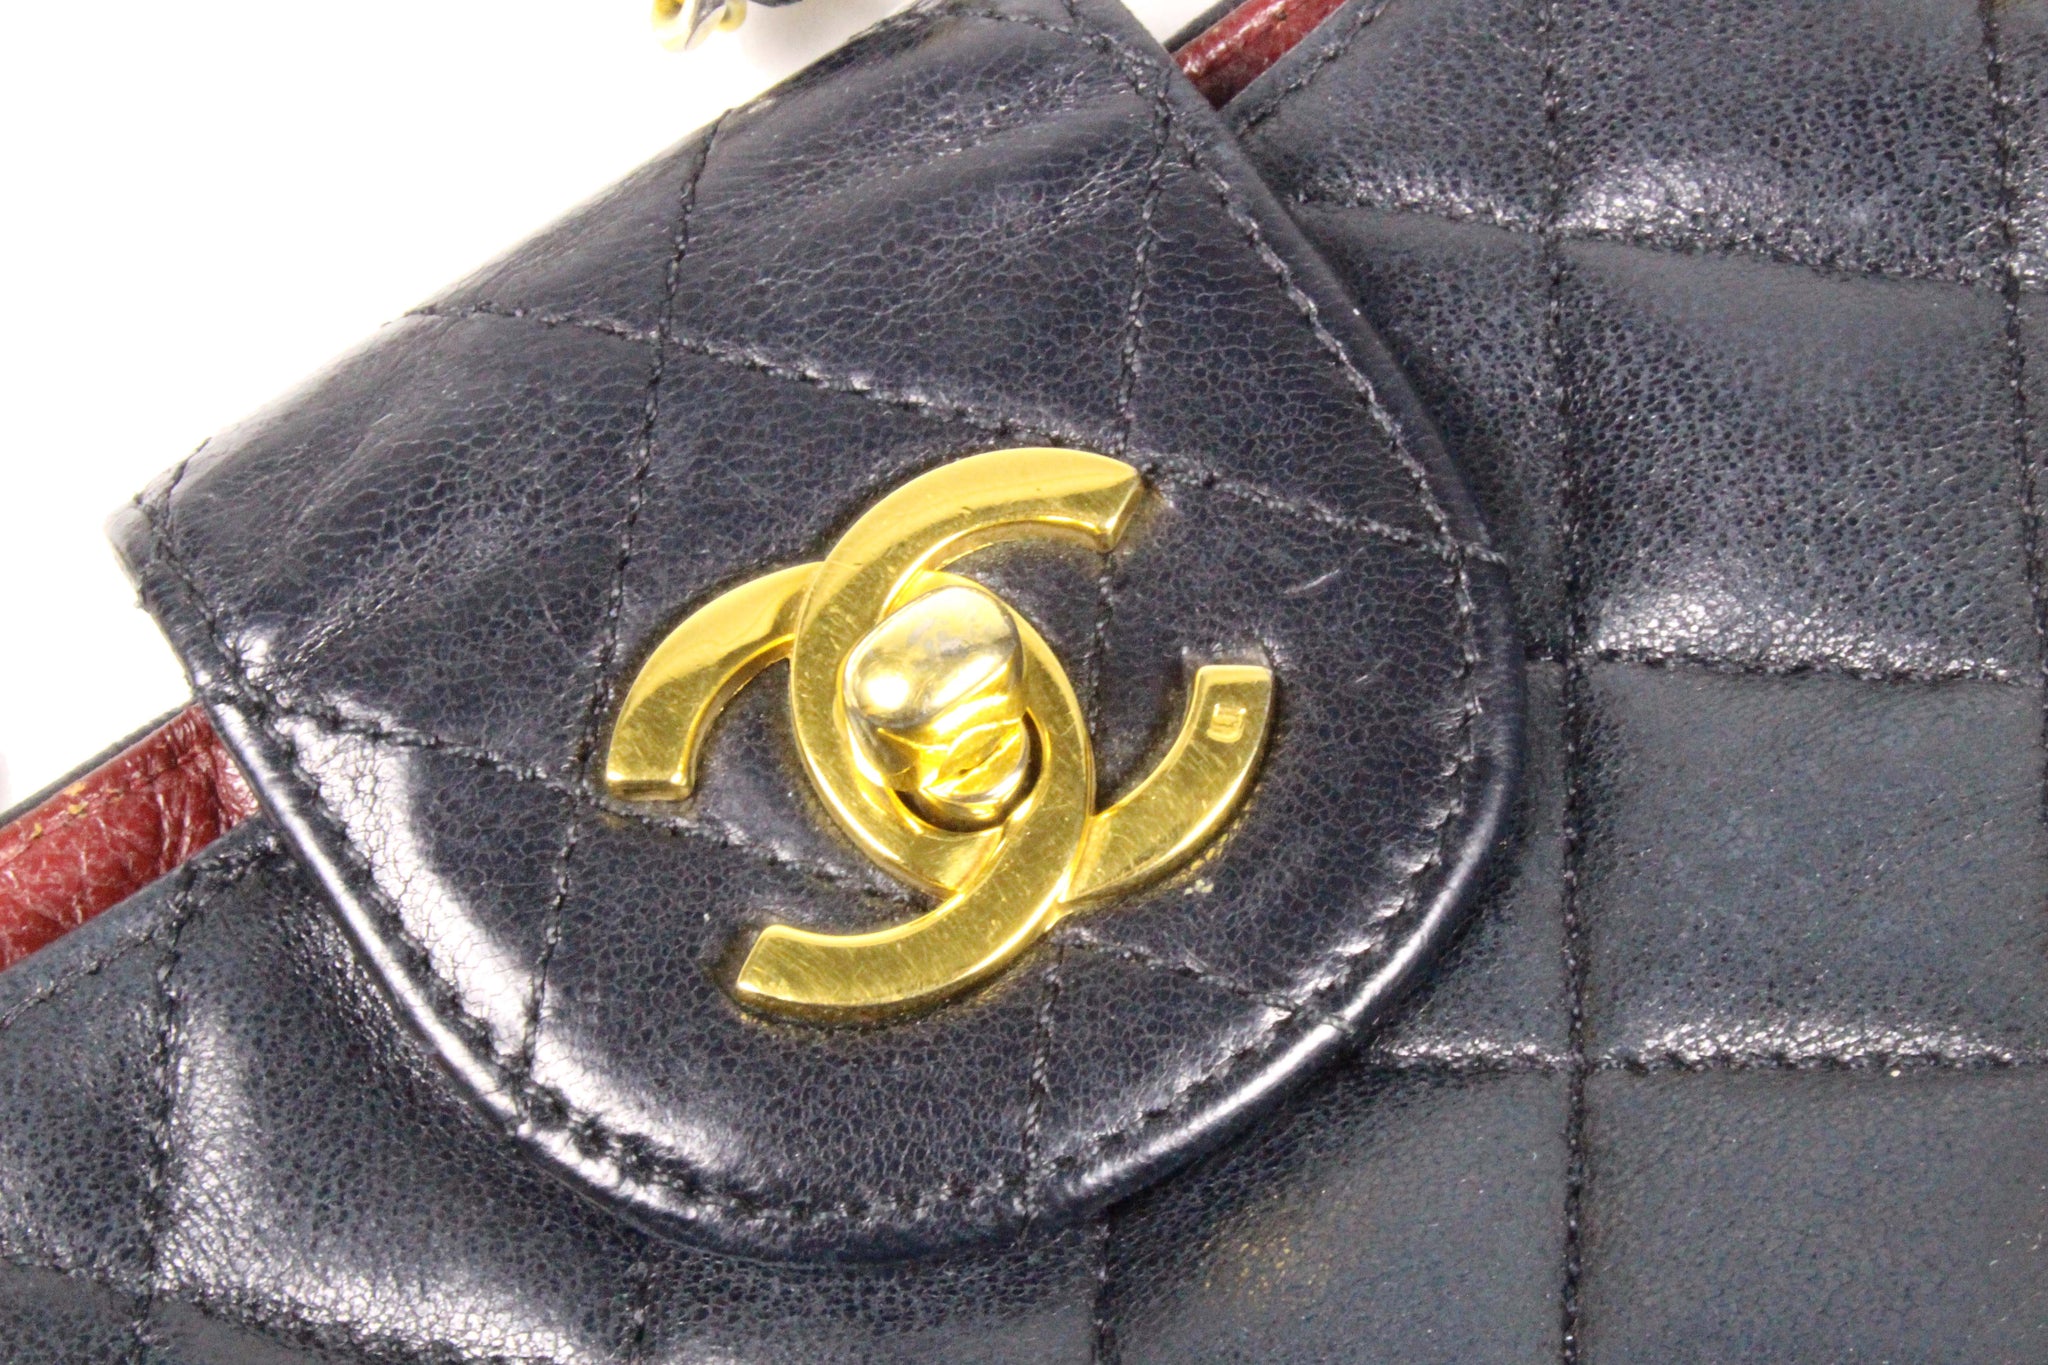 CHANEL quilted leather tote bag – Vintage Carwen